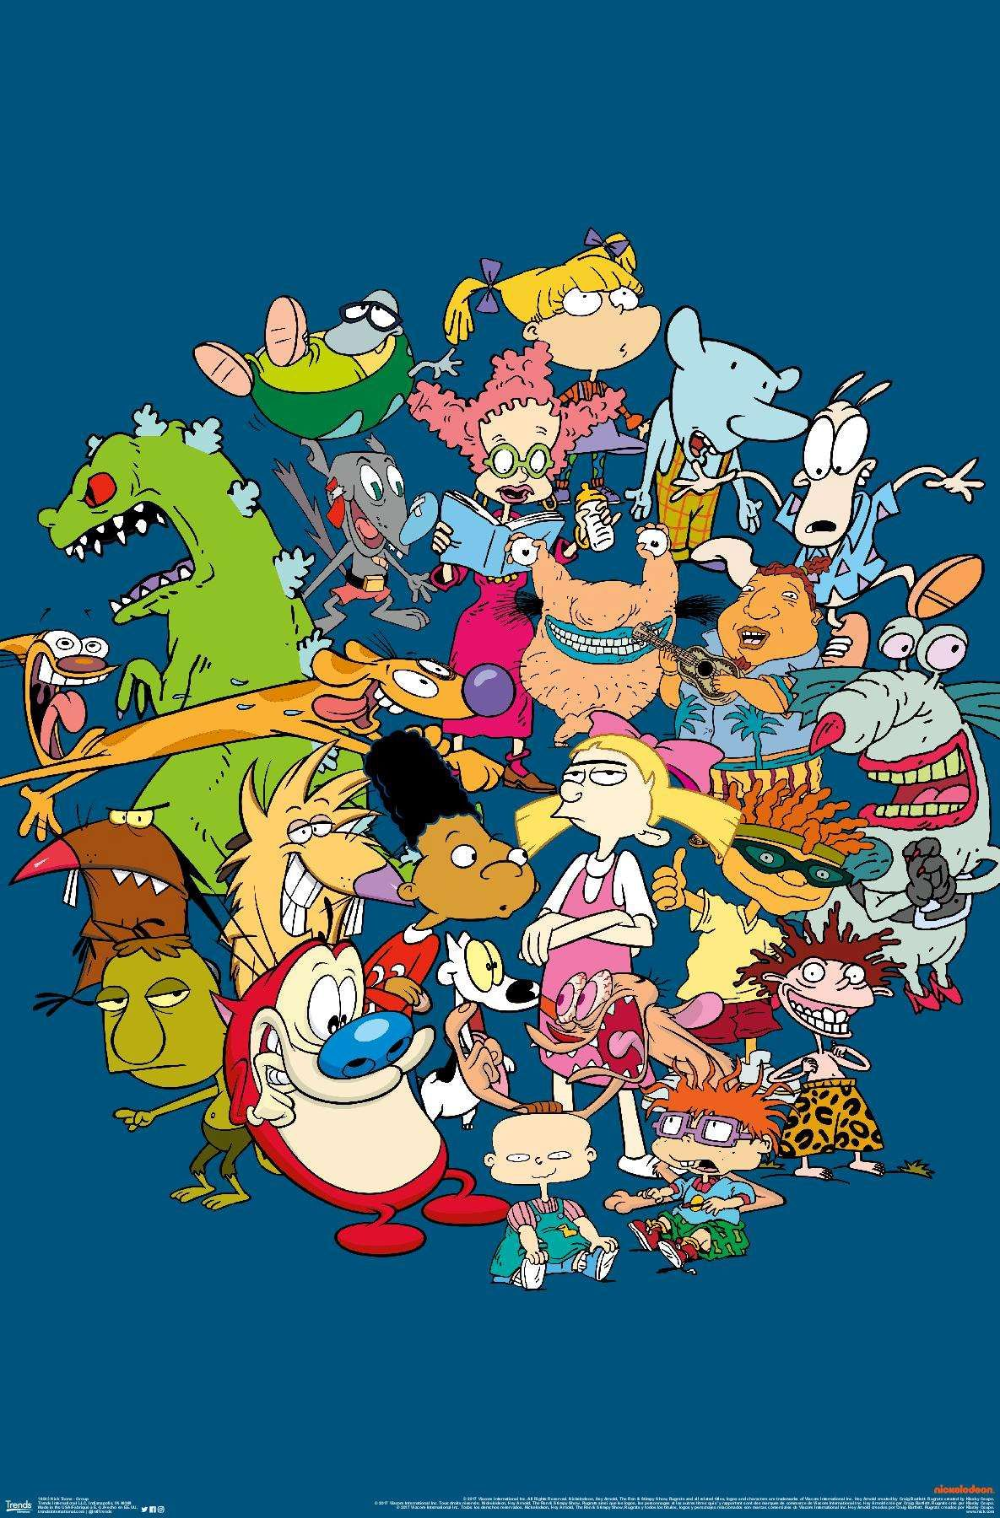 Nickelodeon Group. Cartoon wallpaper, Cartoon wallpaper iphone, Poster prints